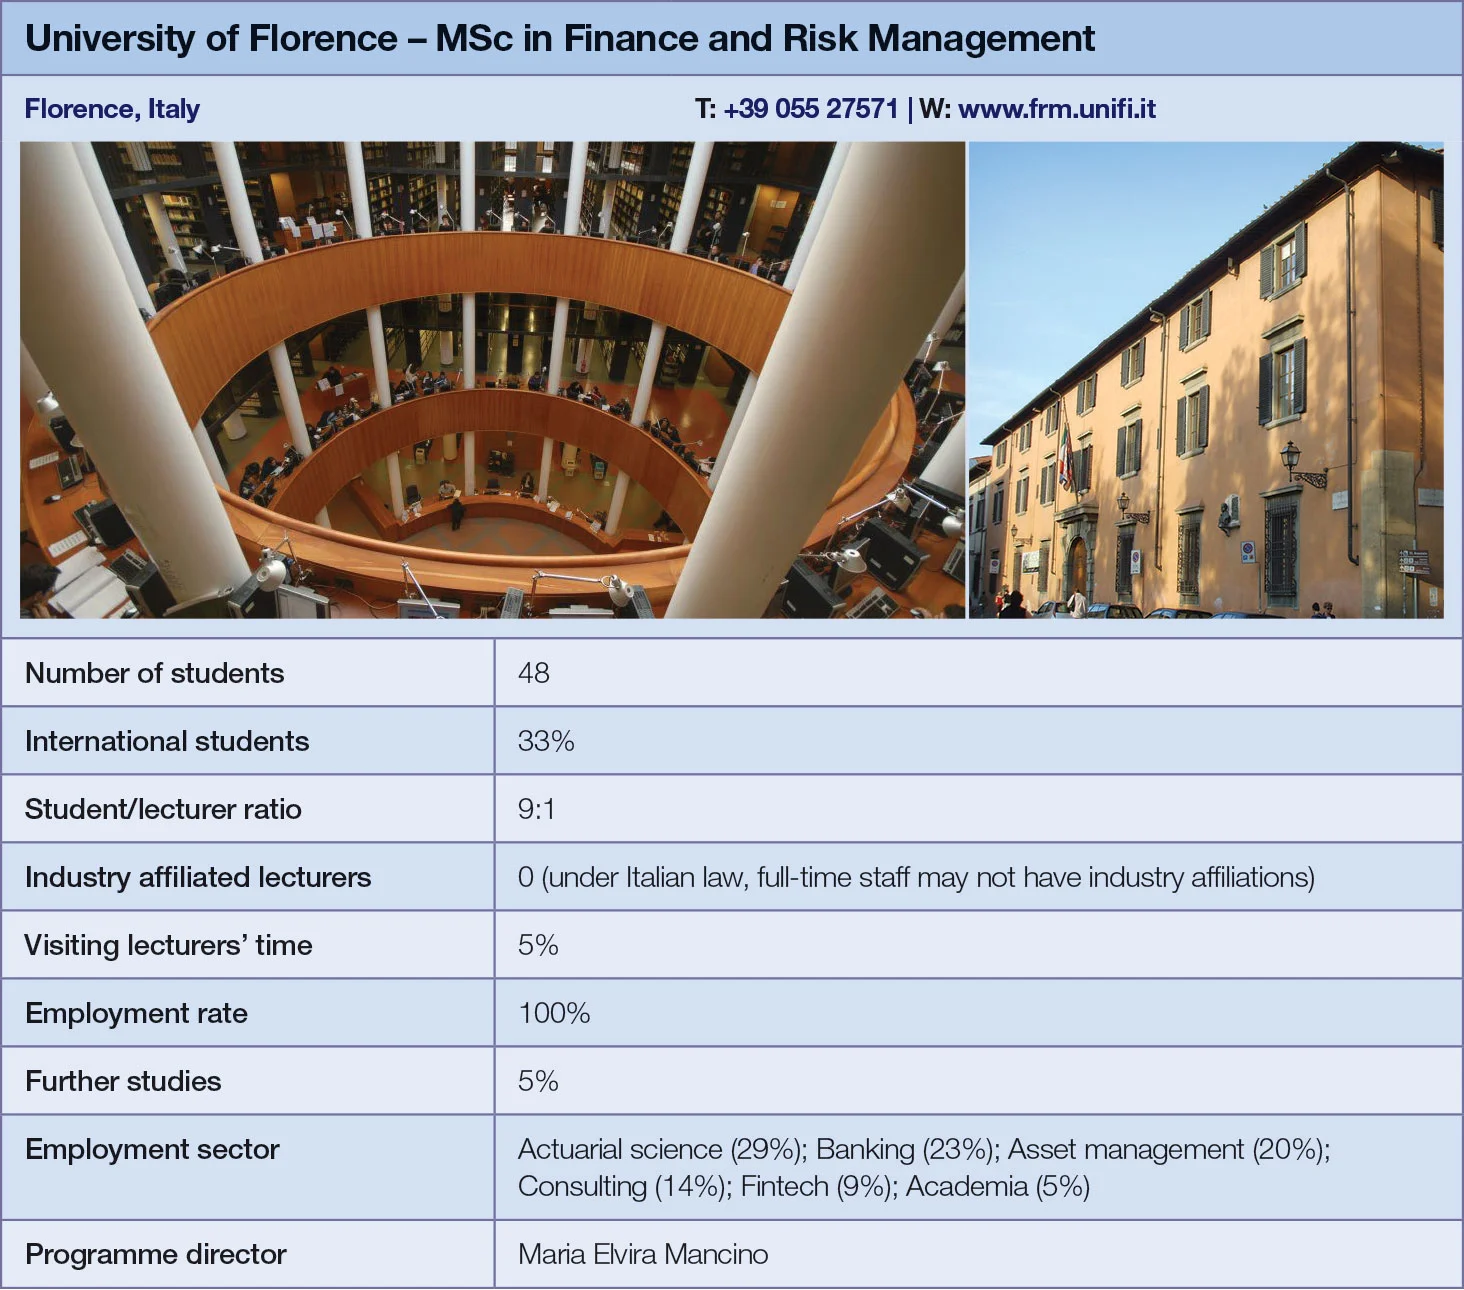 University of Florence metrics